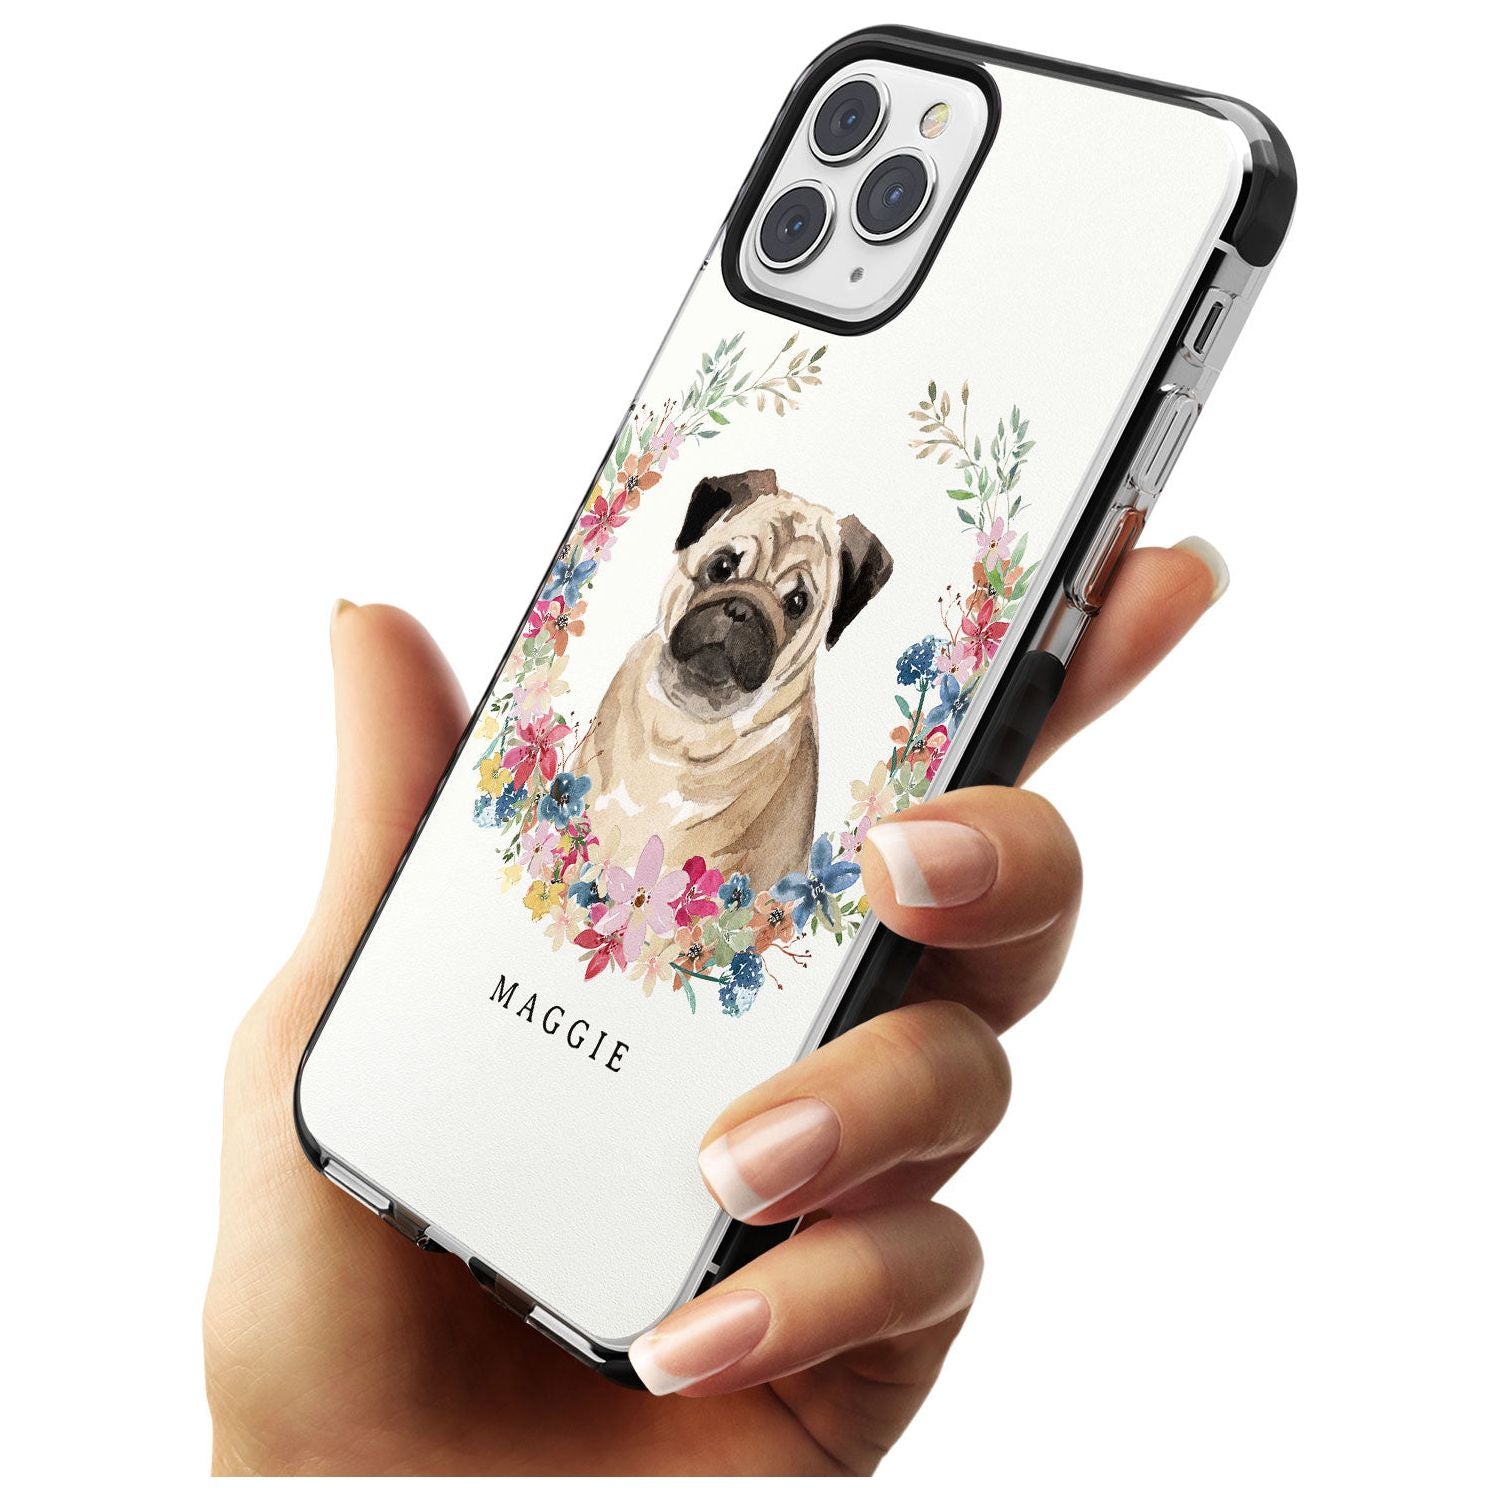 Pug - Watercolour Dog Portrait Black Impact Phone Case for iPhone 11 Pro Max